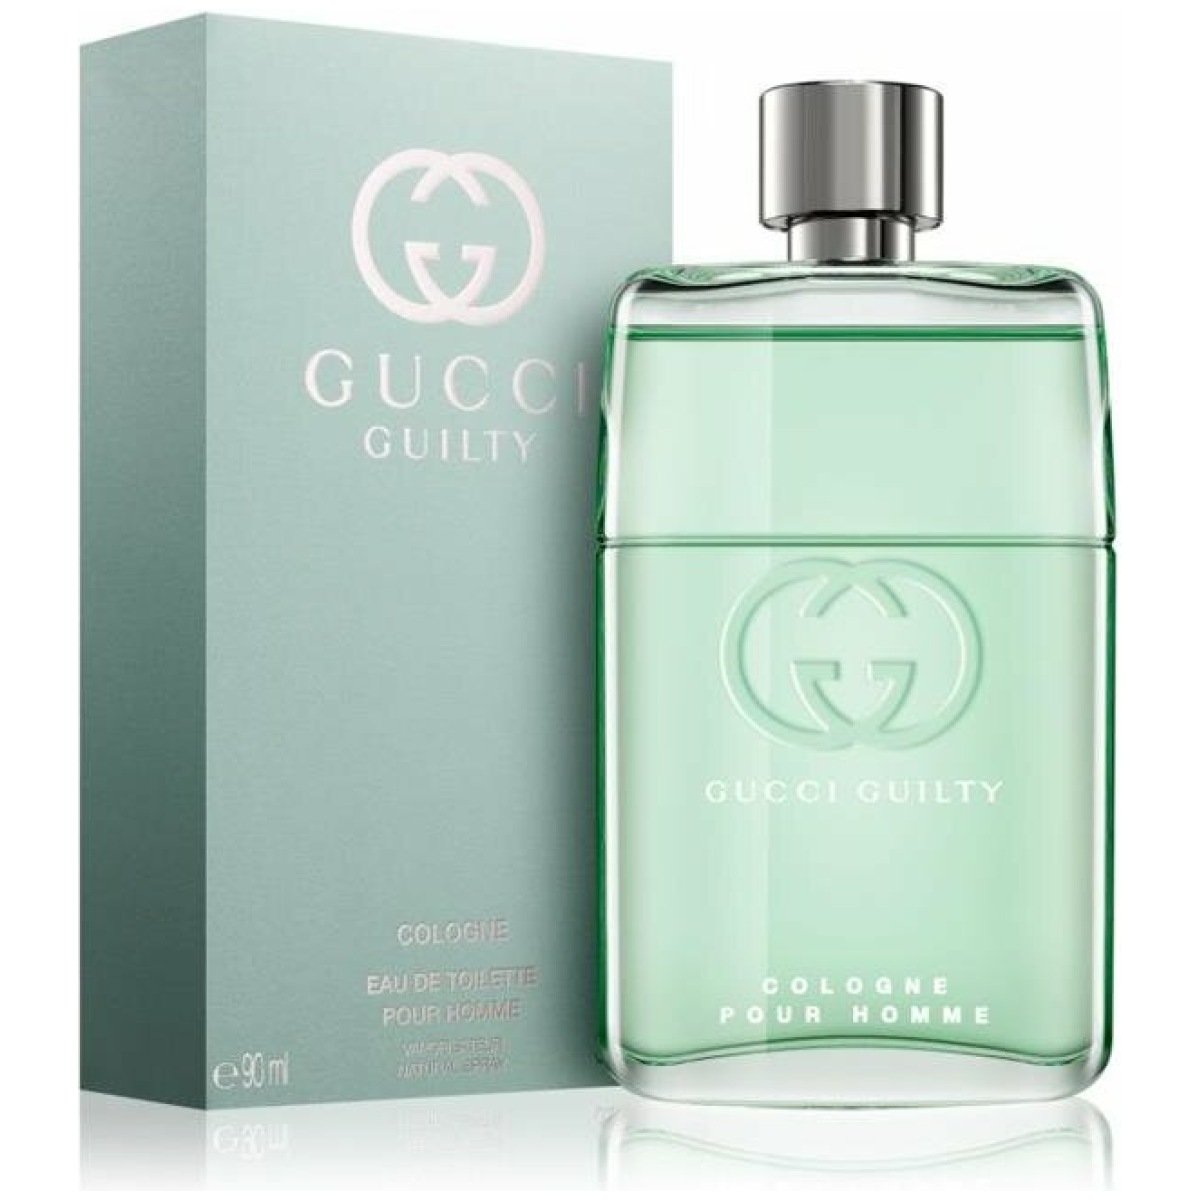 Gucci Guilty Cologne Pour Homme EDT Perfume For Men 100 ml